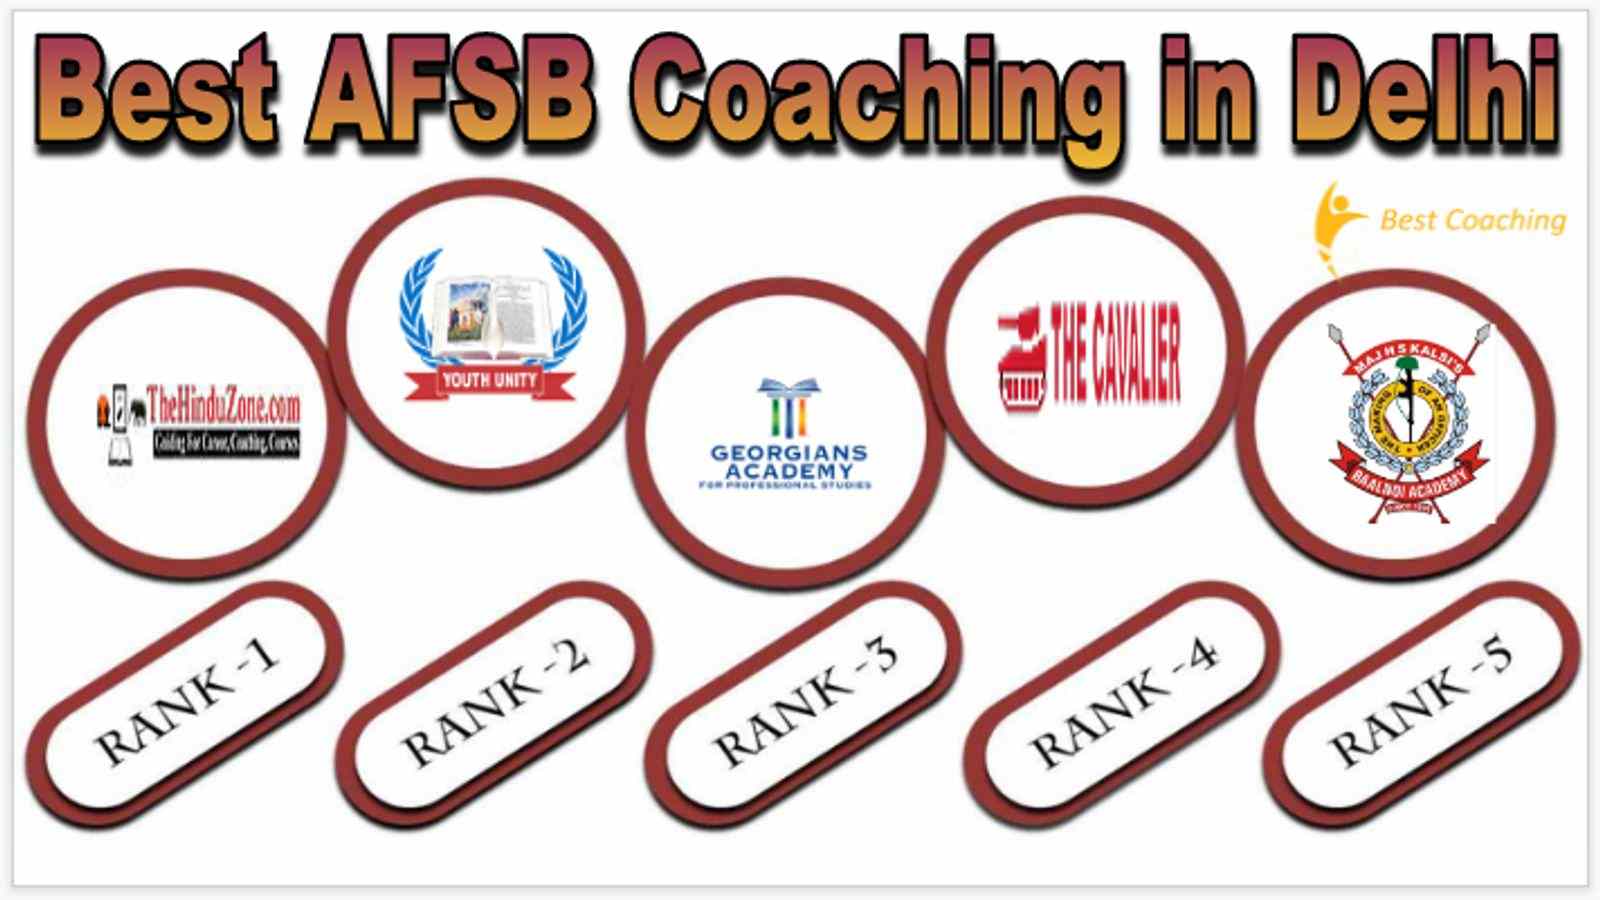 Best afsb Coaching in Delhi